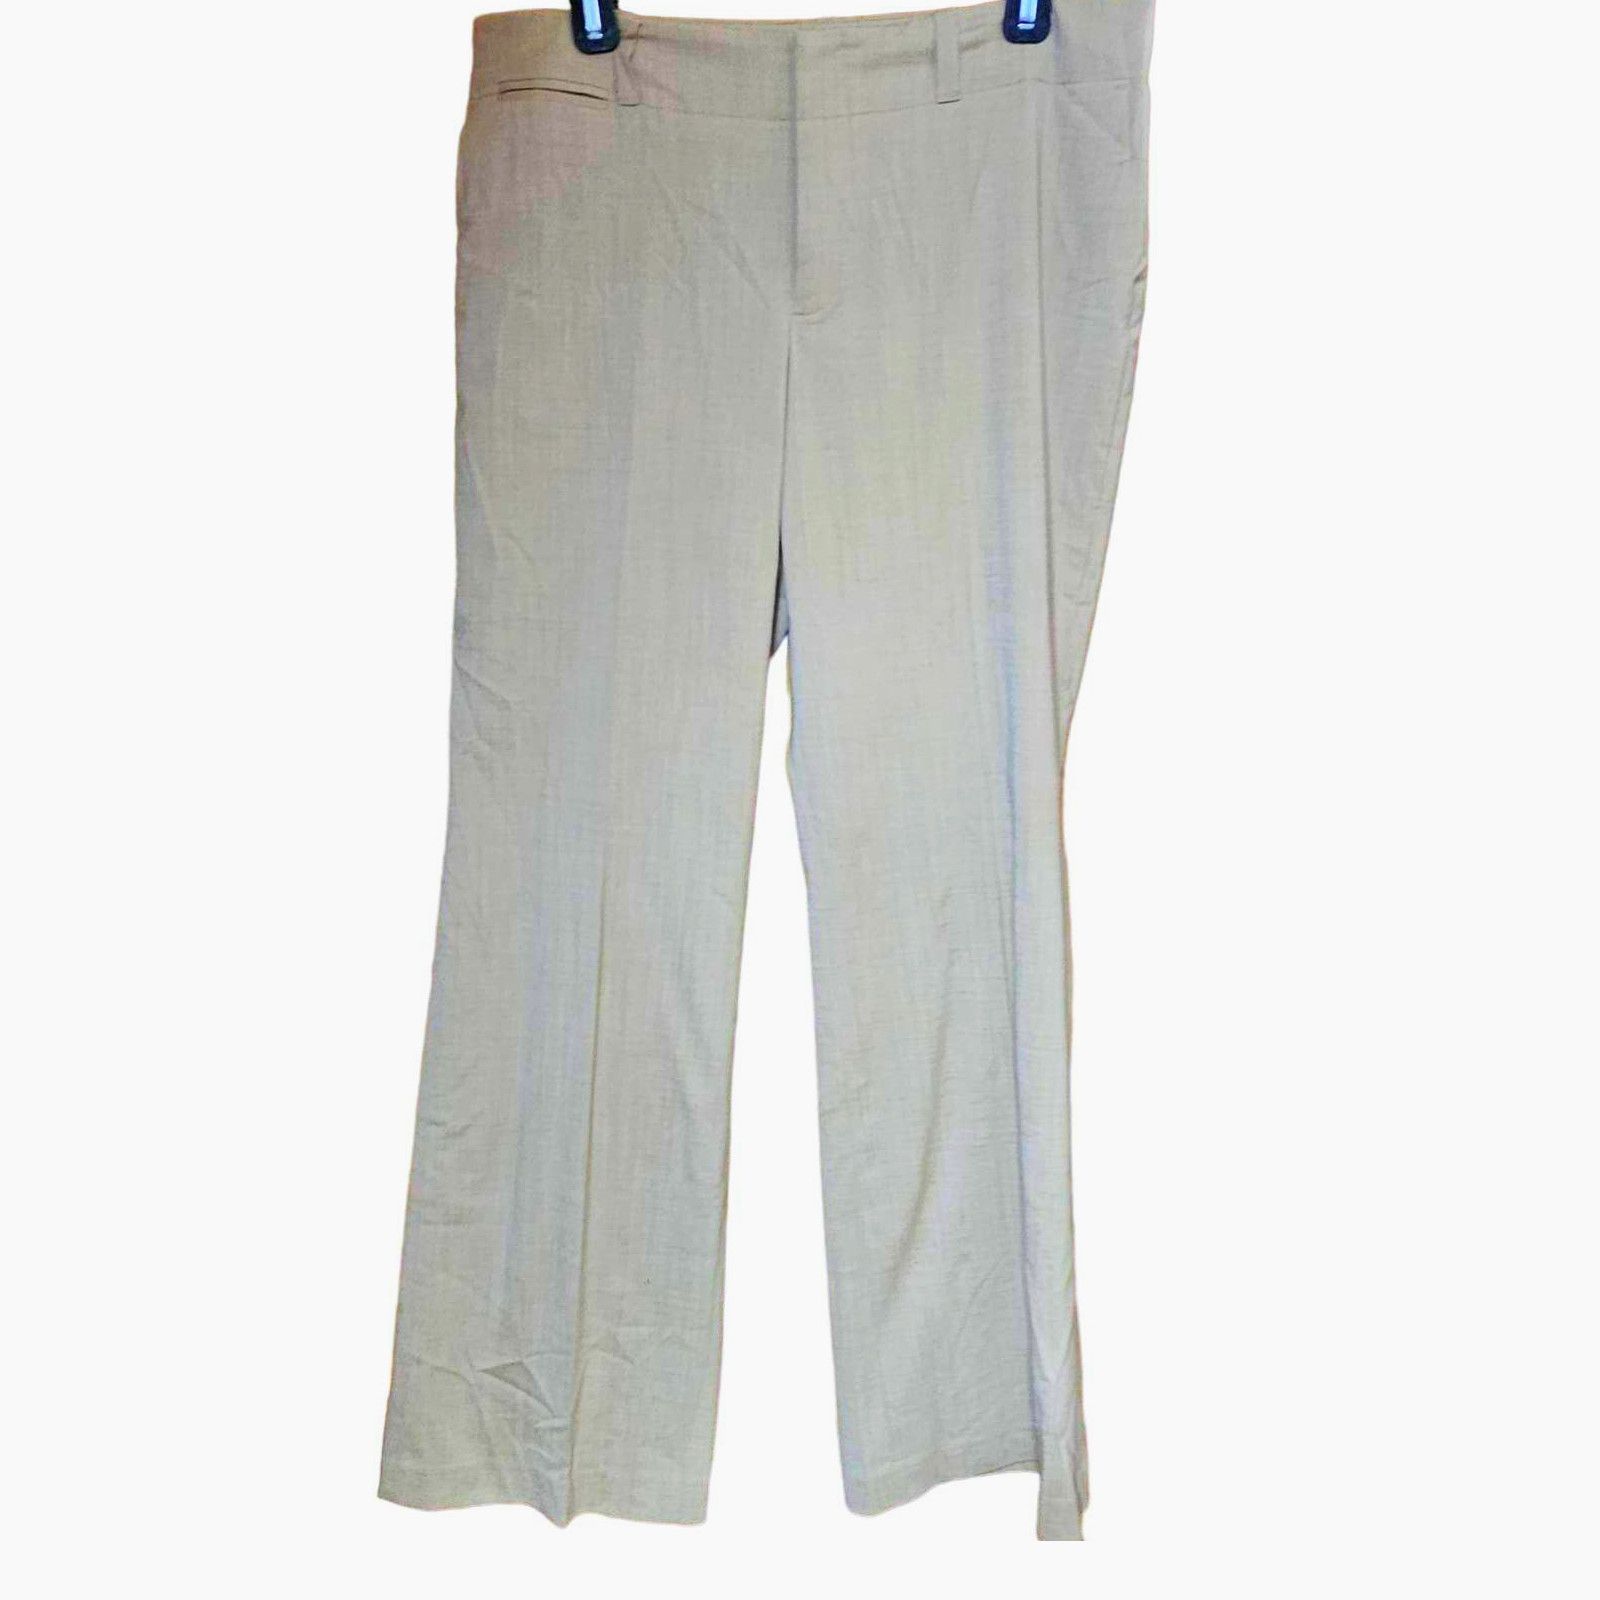 Banana Republic Factory Store Multi Color Gray Dress Pants Size 10 (Petite)  - 73% off